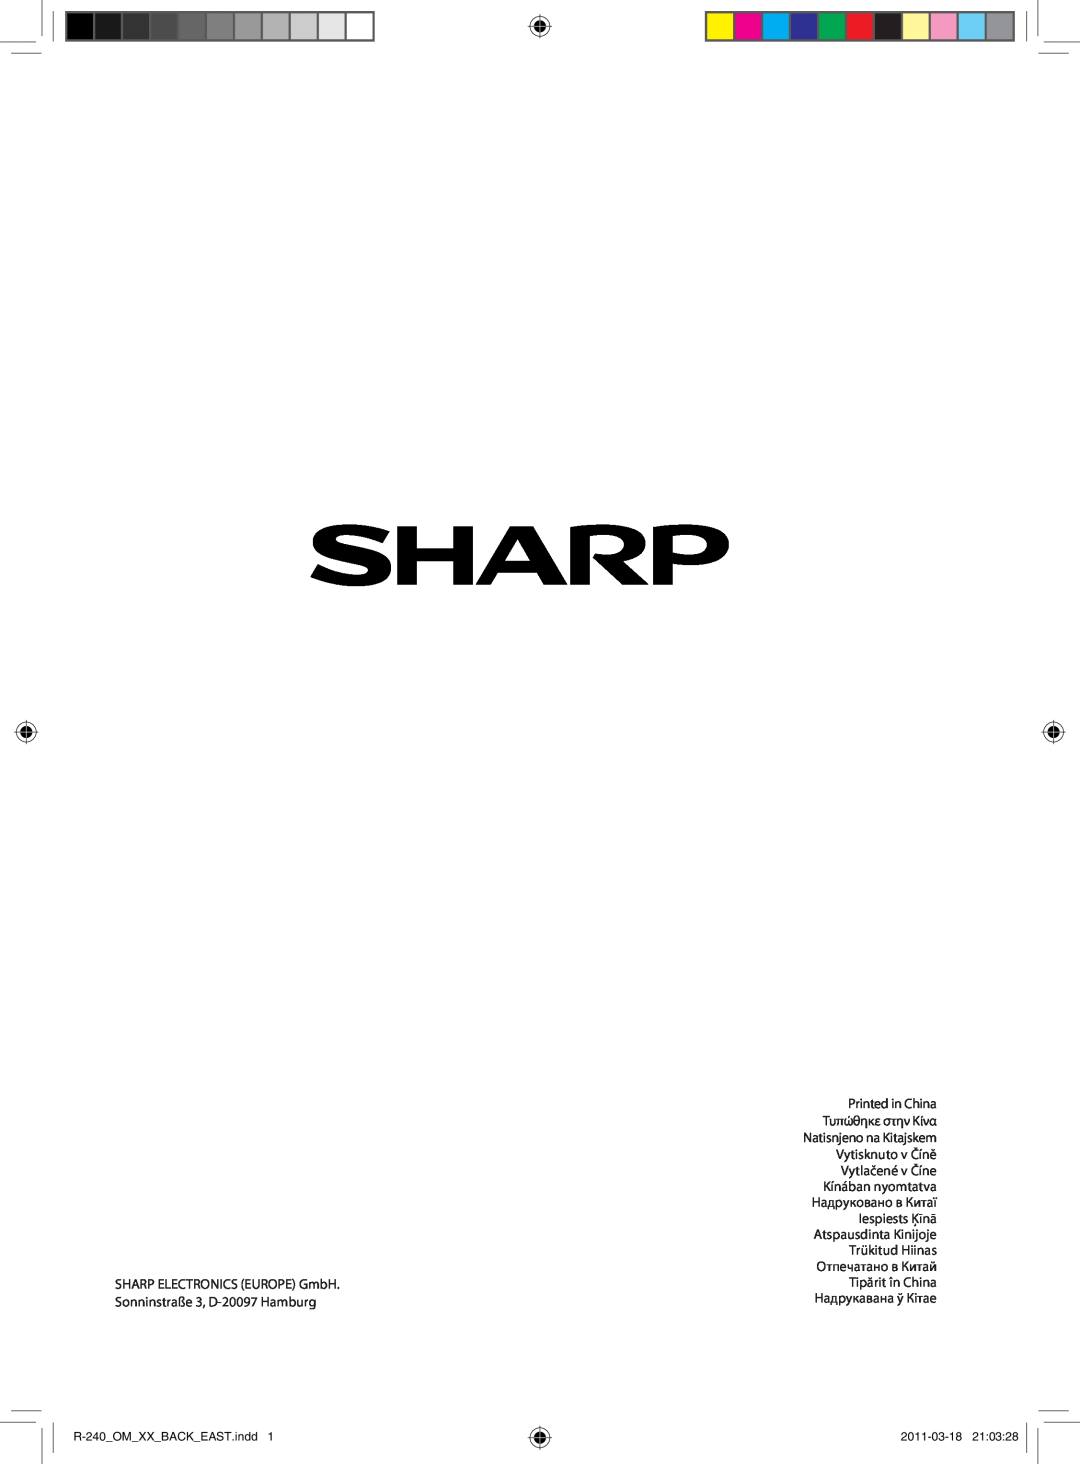 Sharp manual SHARP ELECTRONICS EUROPE GmbH. Sonninstraße 3, D-20097 Hamburg, R-240OMXXBACKEAST.indd, 2011-03-18 